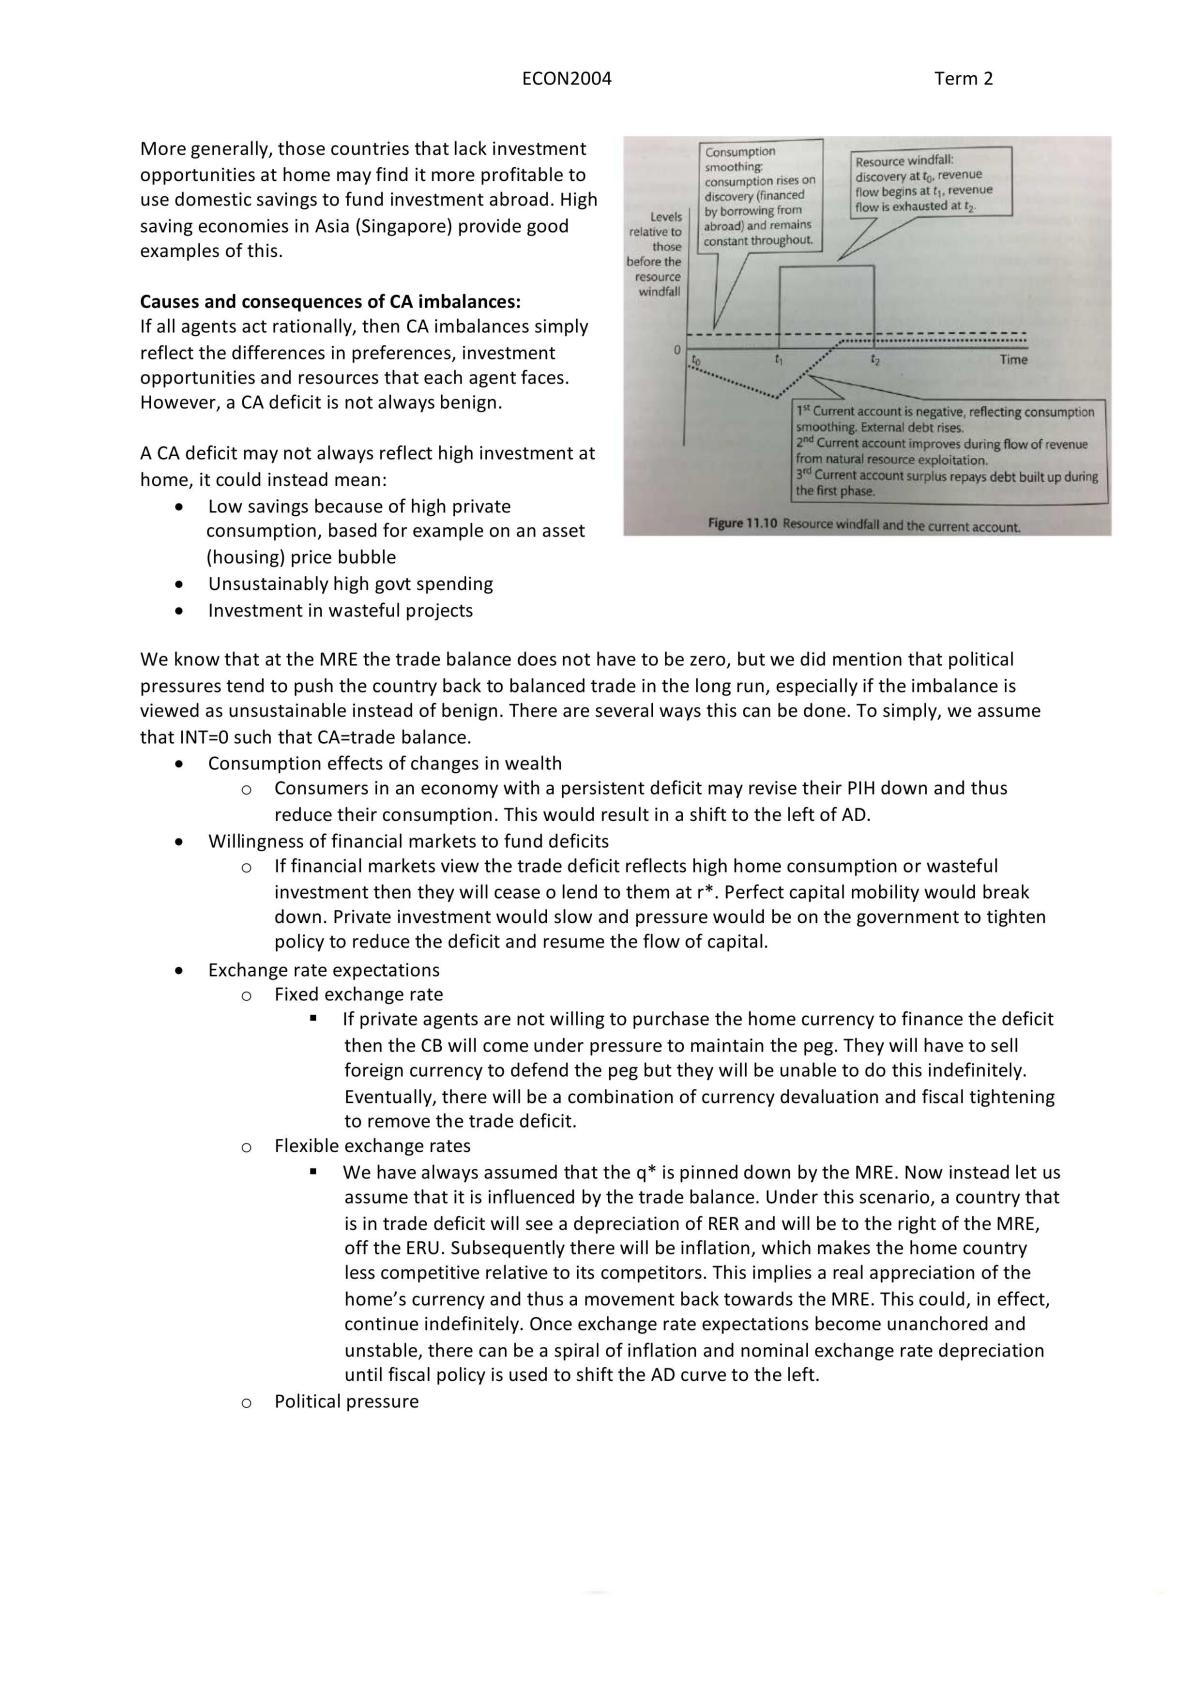 Macroeconomics Notes - Page 32